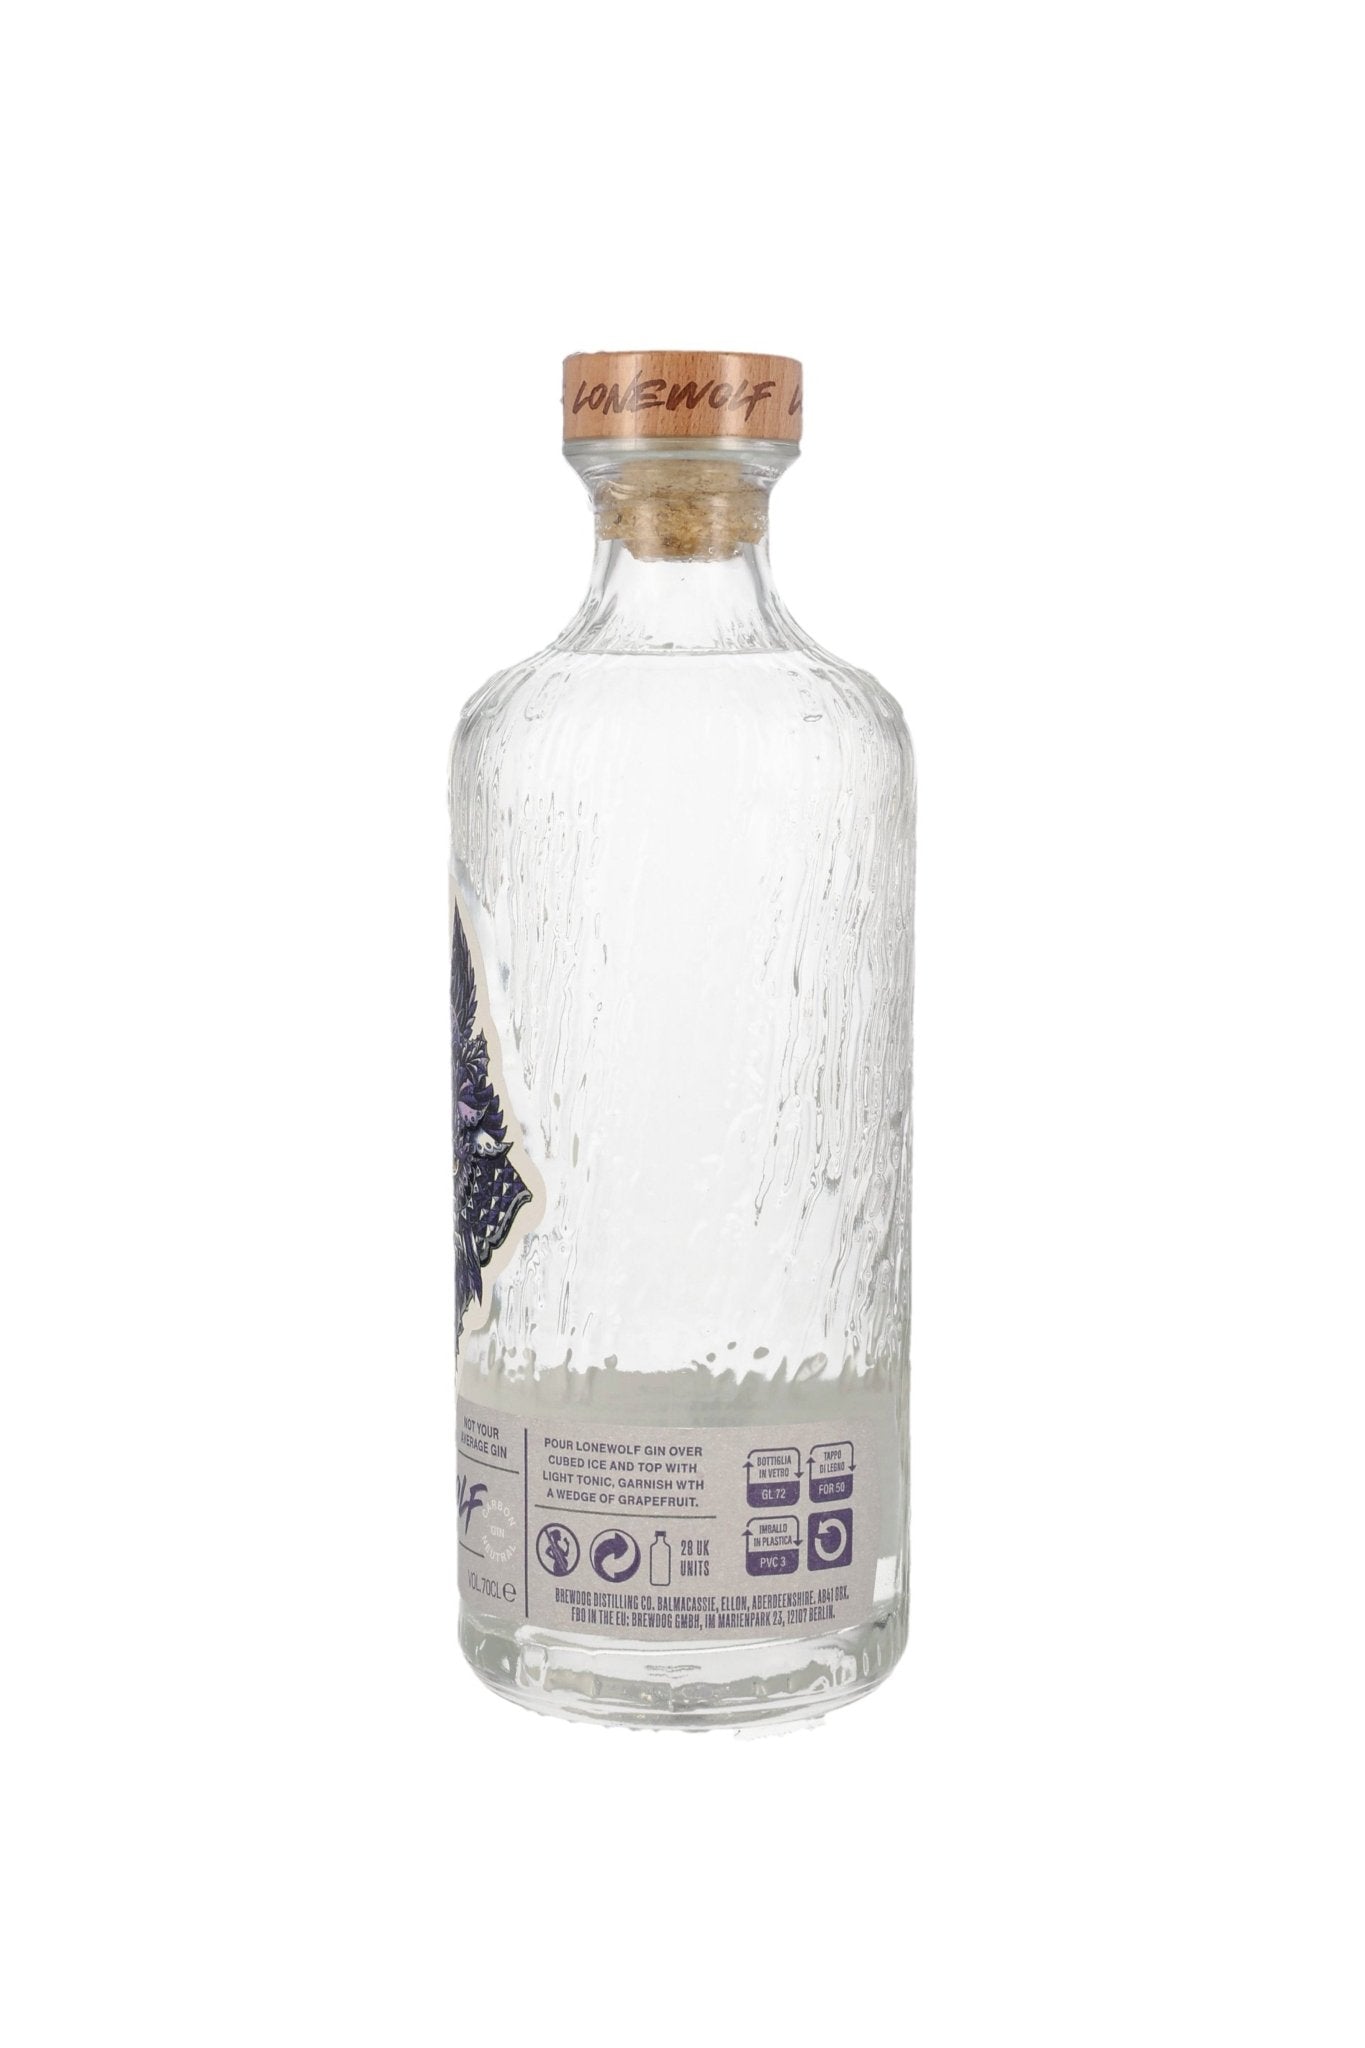 BrewDog LoneWolf Original Juniper Gin 40% vol. 700ml - Maltimore